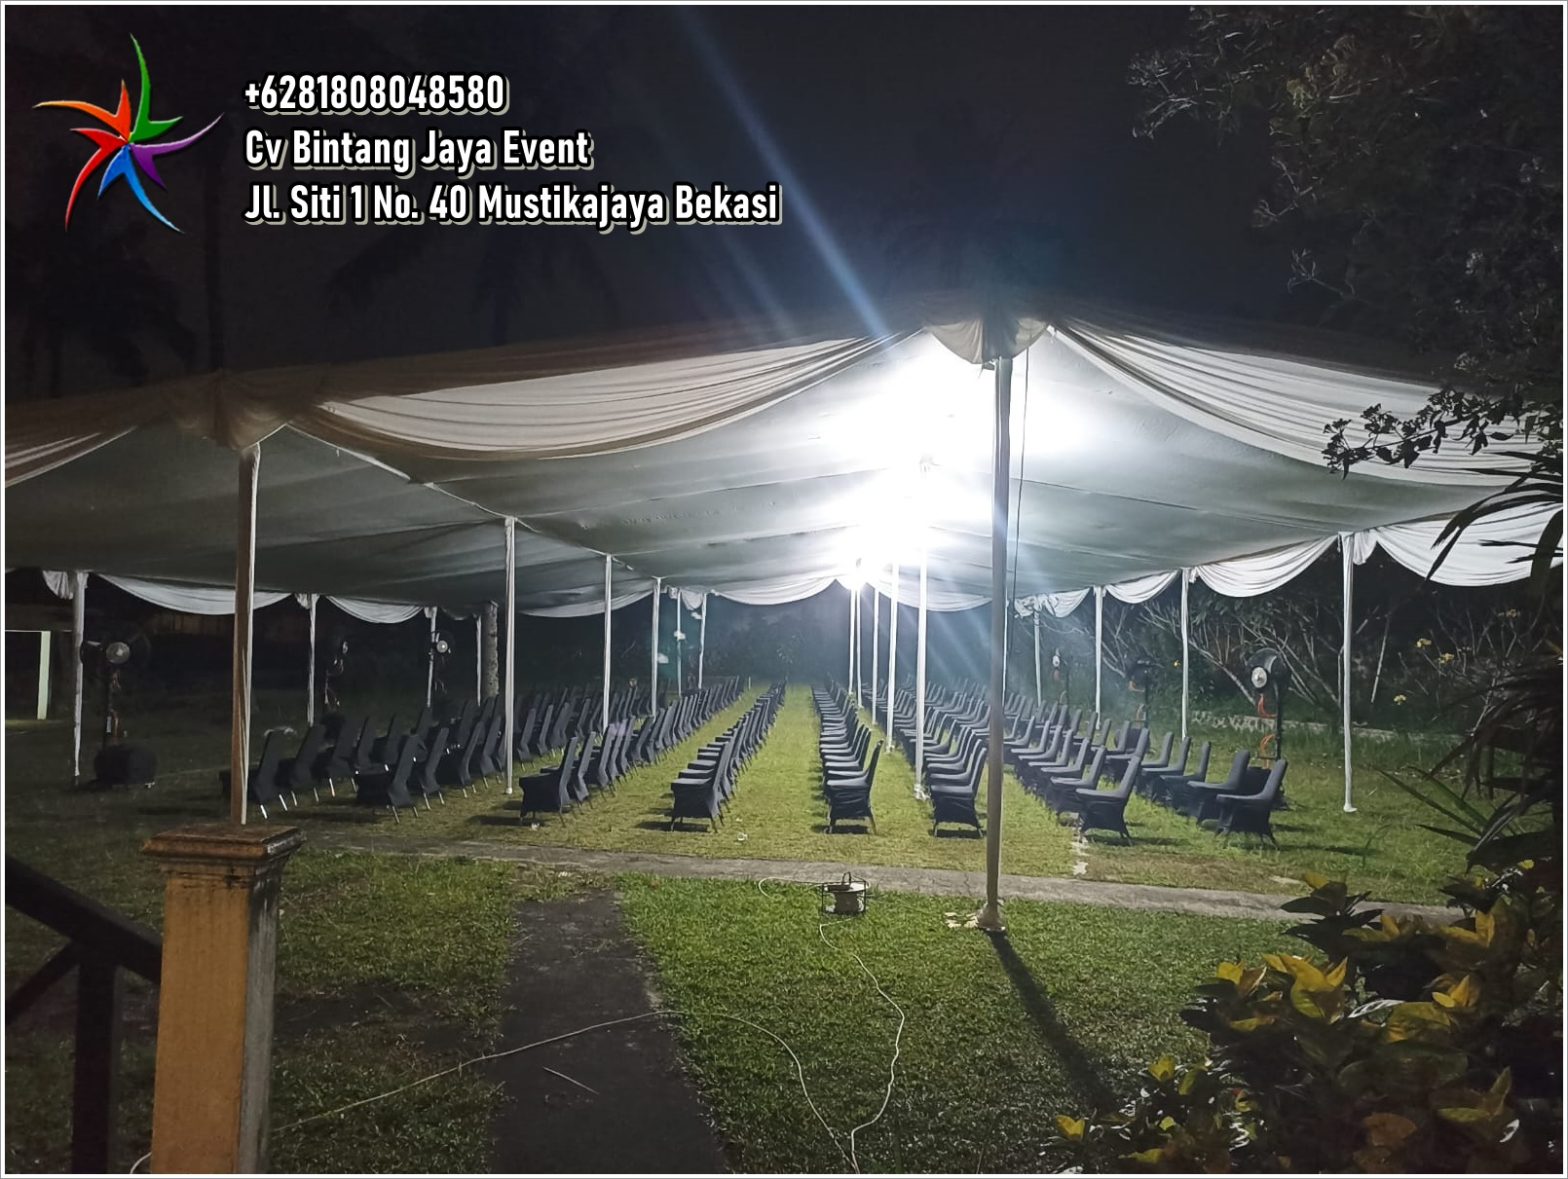 Sewa Tenda Galur Johar Baru Jakarta Pusat